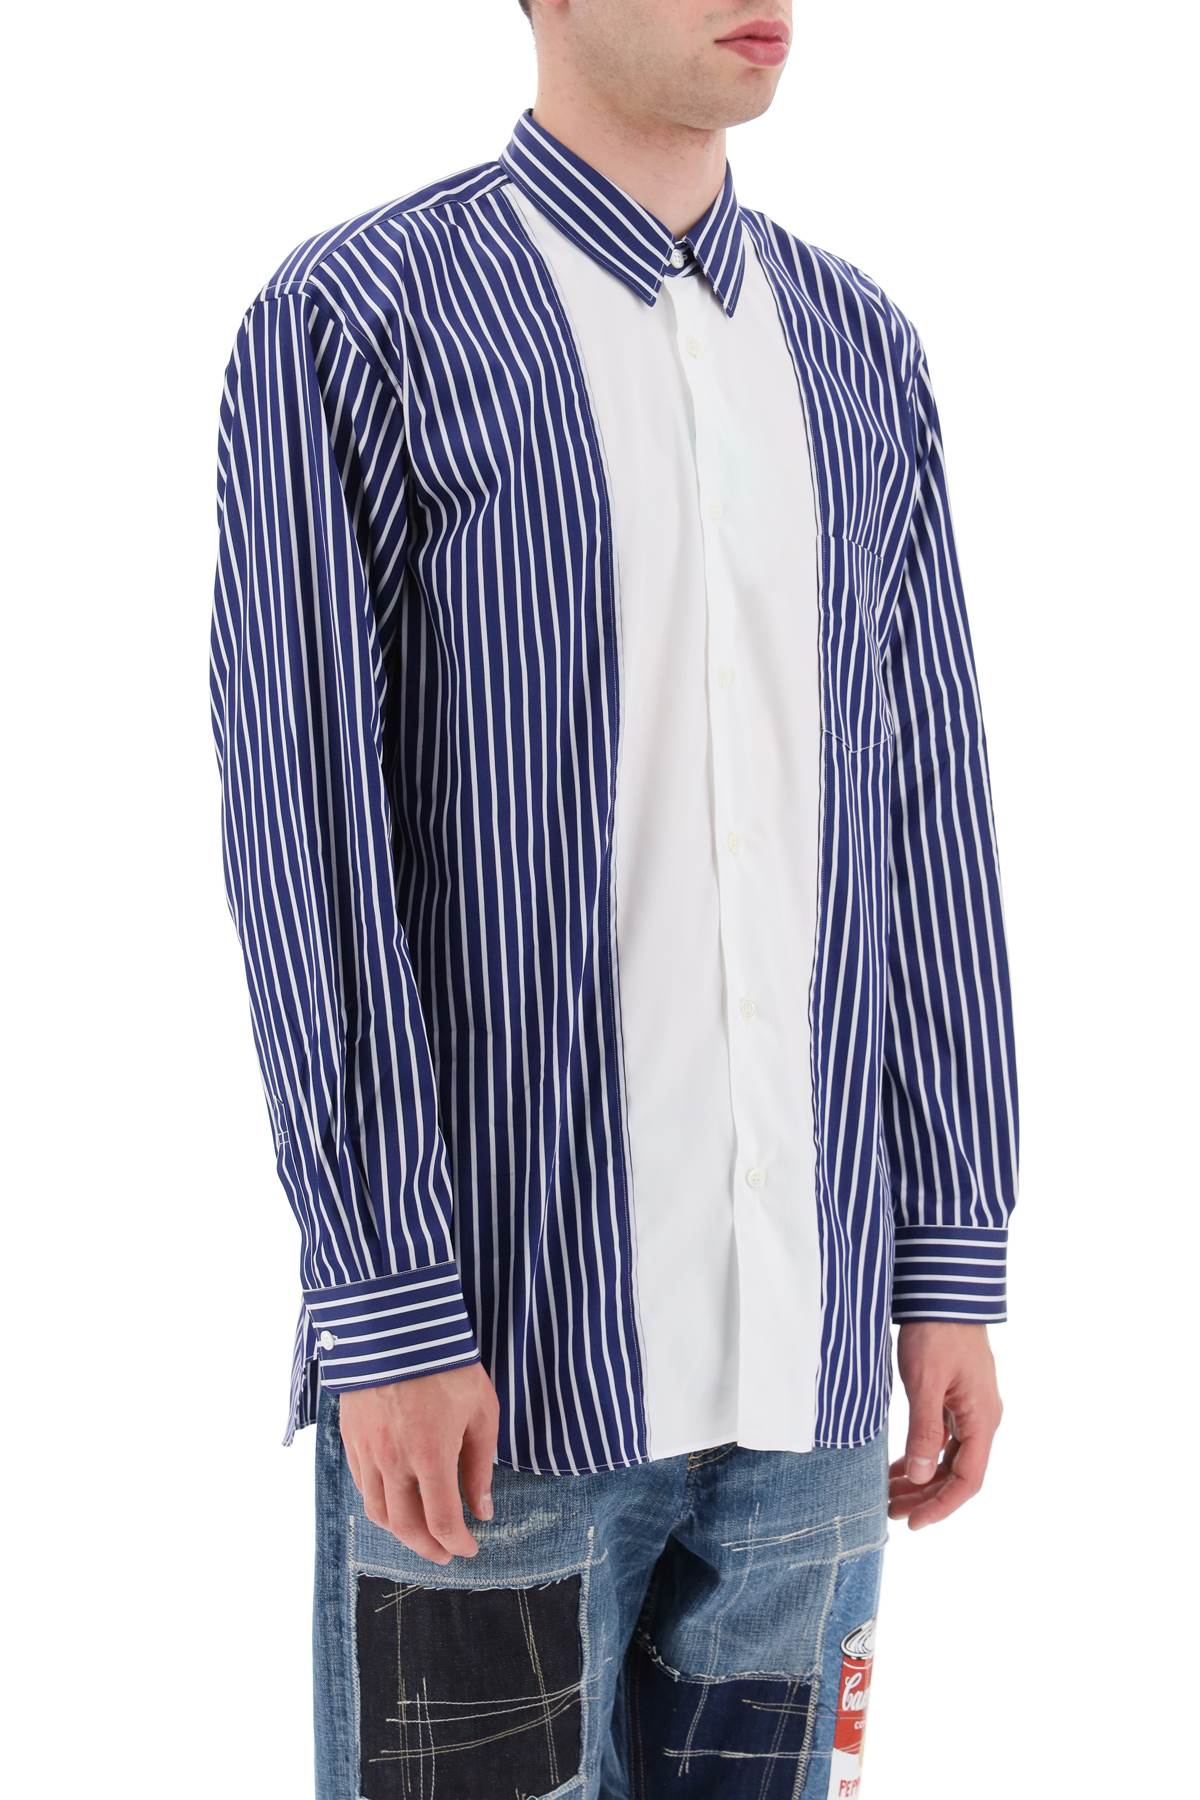 Comme Des Garcons Shirt Comme des garcons shirt striped cotton shirt